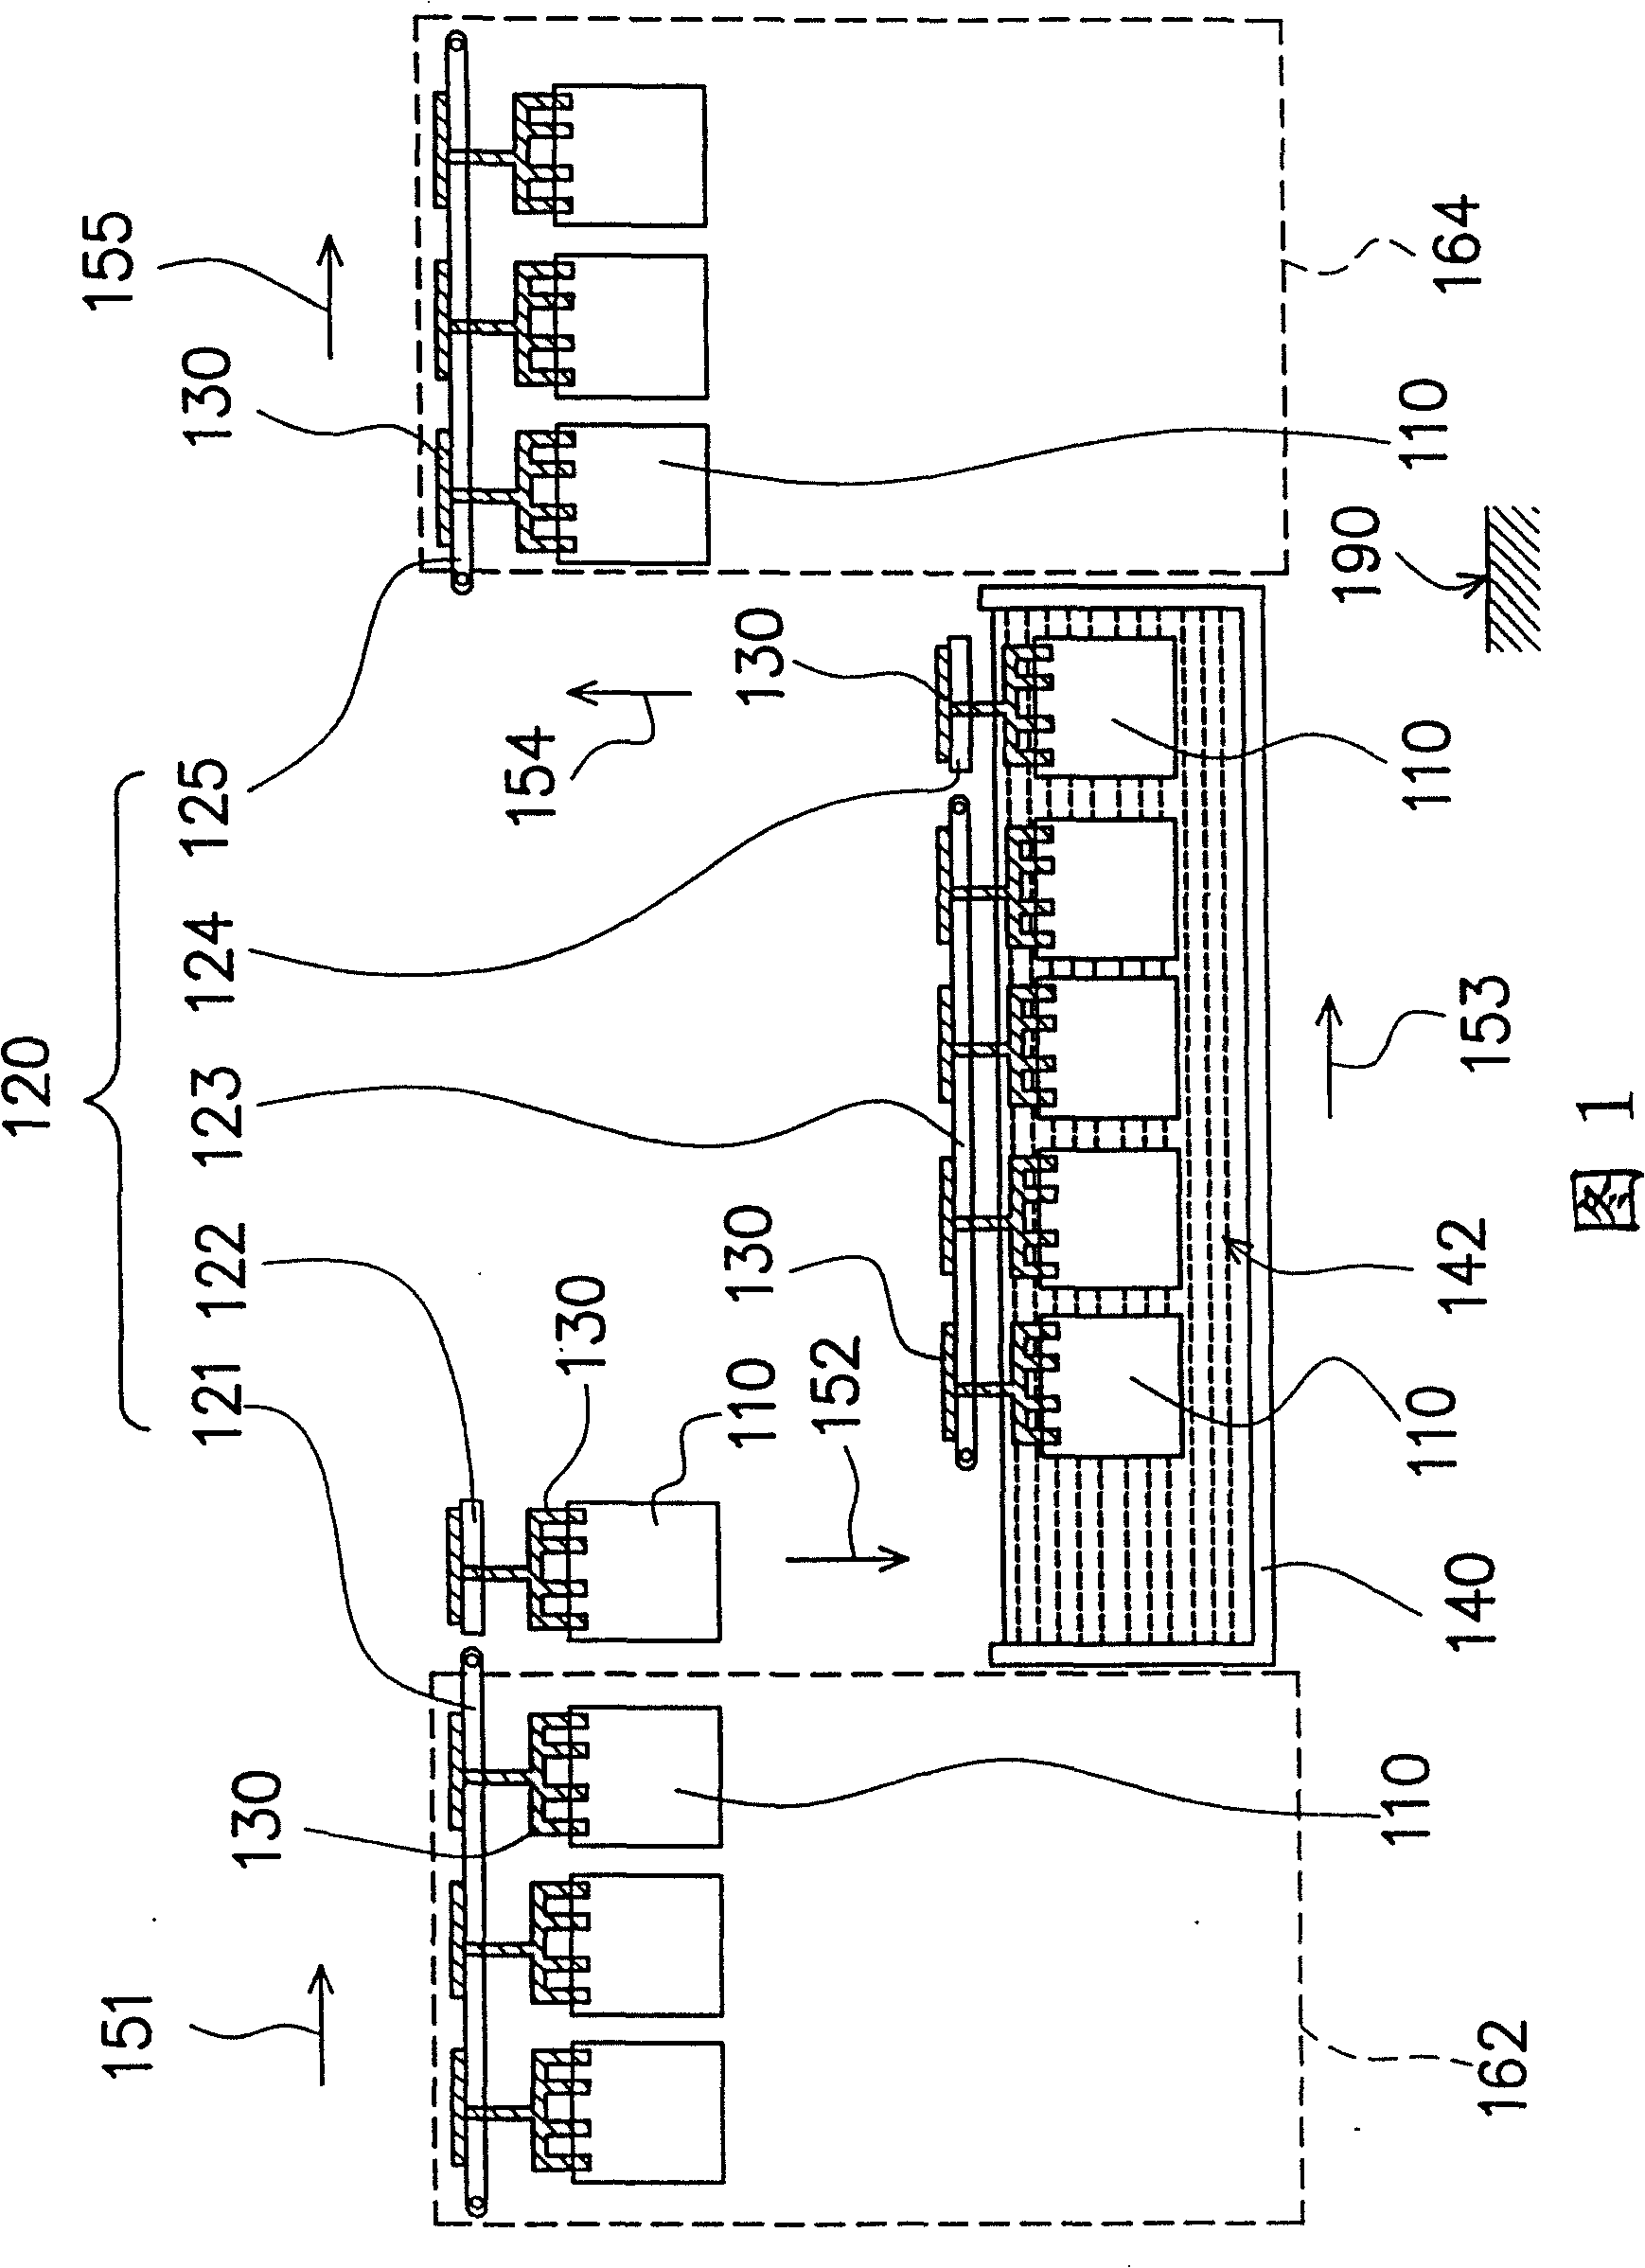 Method for mfg. printed circuitboard